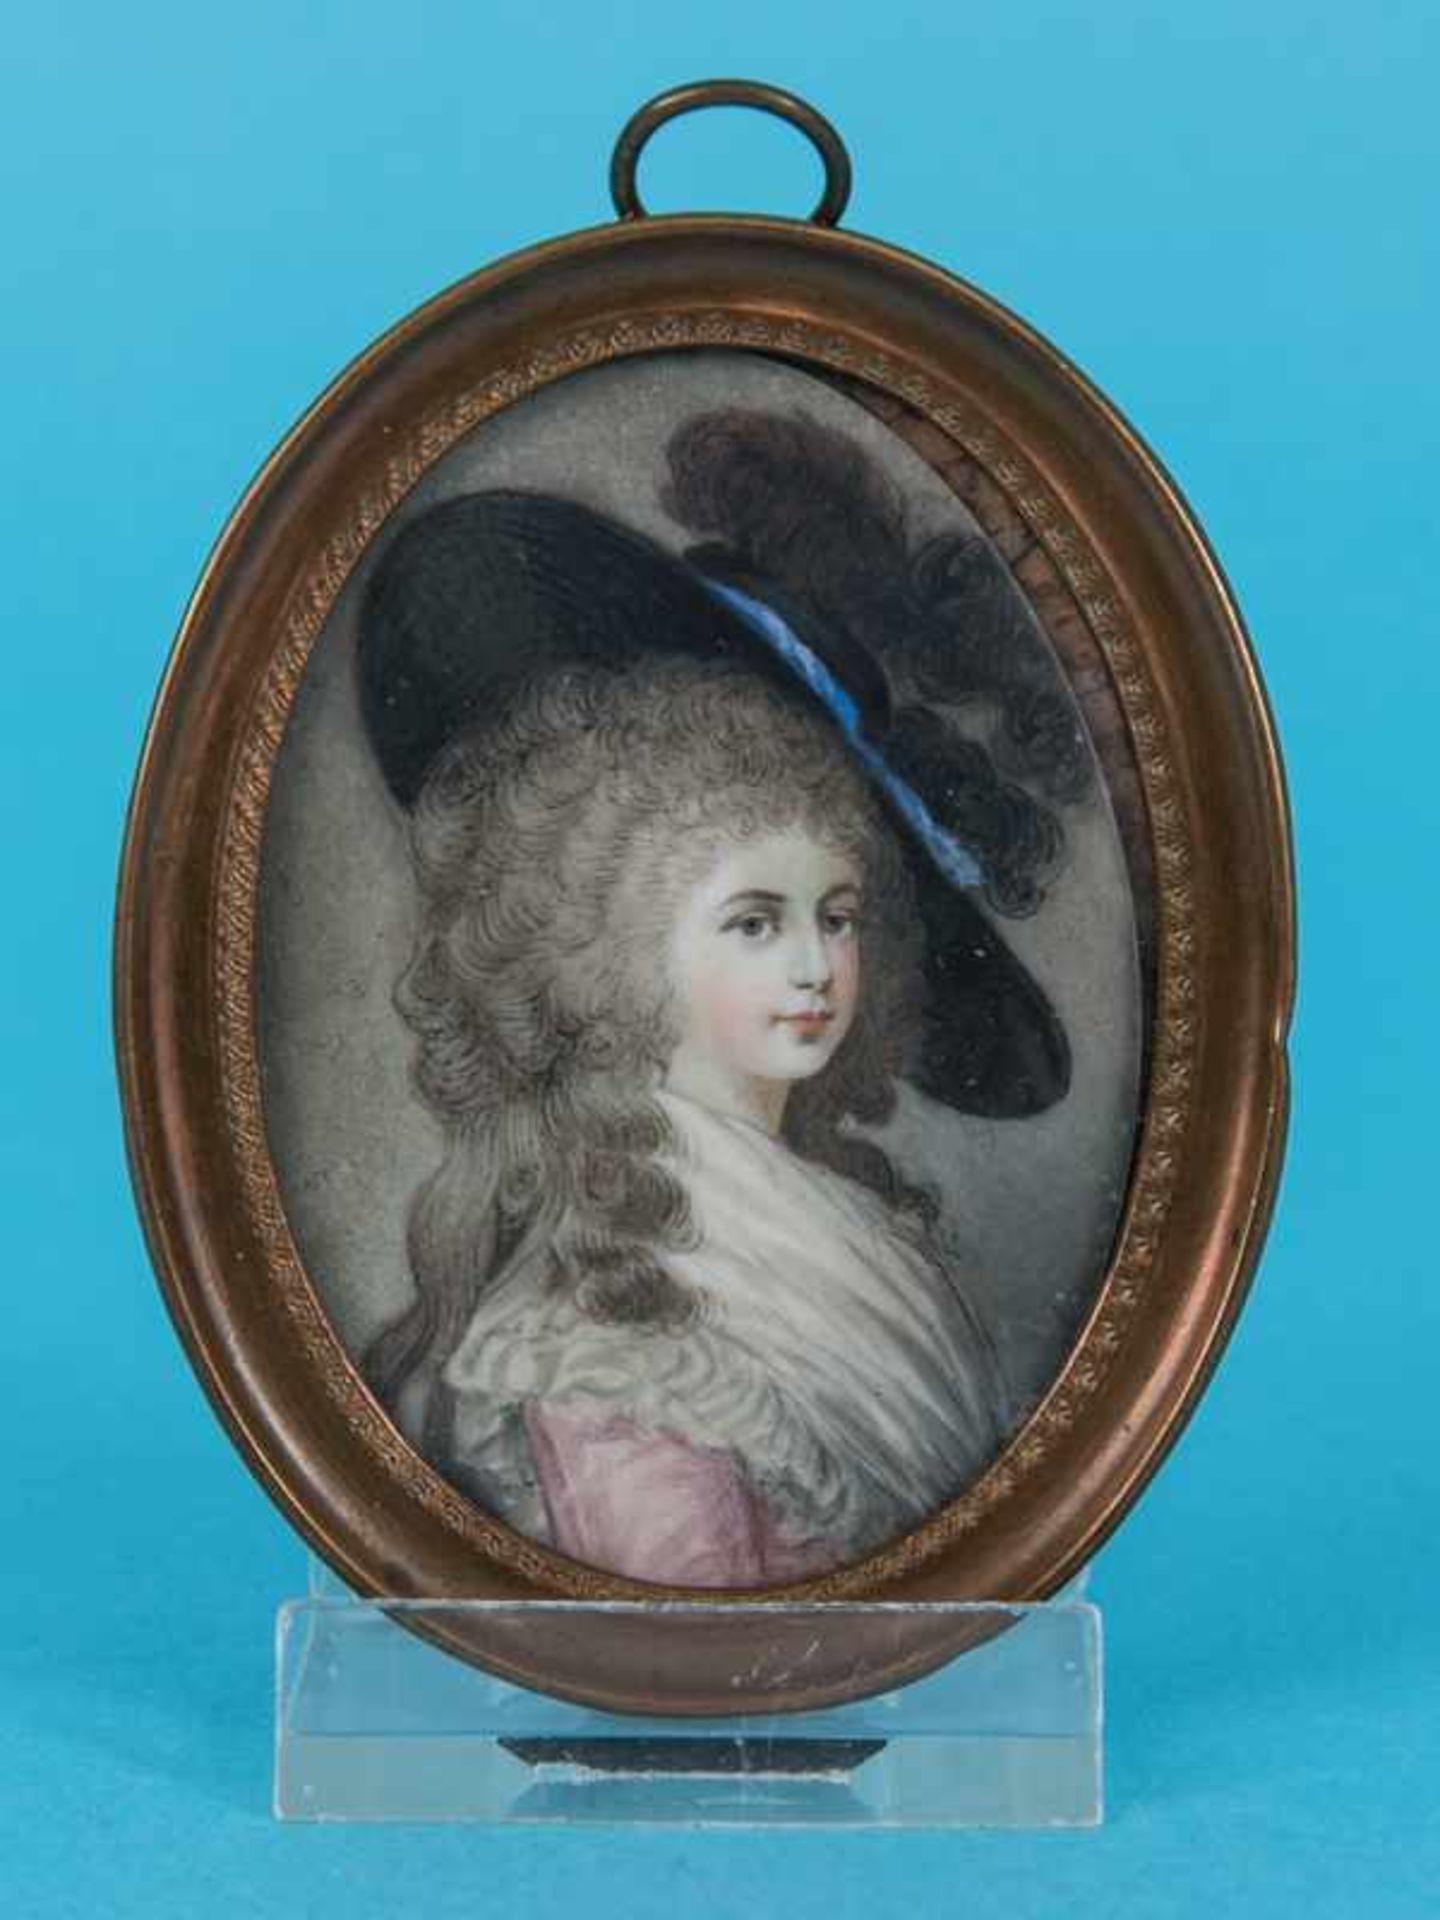 Damenbildnis-Miniatur "Duchess of Devonshire" (nach Thomas Gainsborough), 19. Jh. Farbige